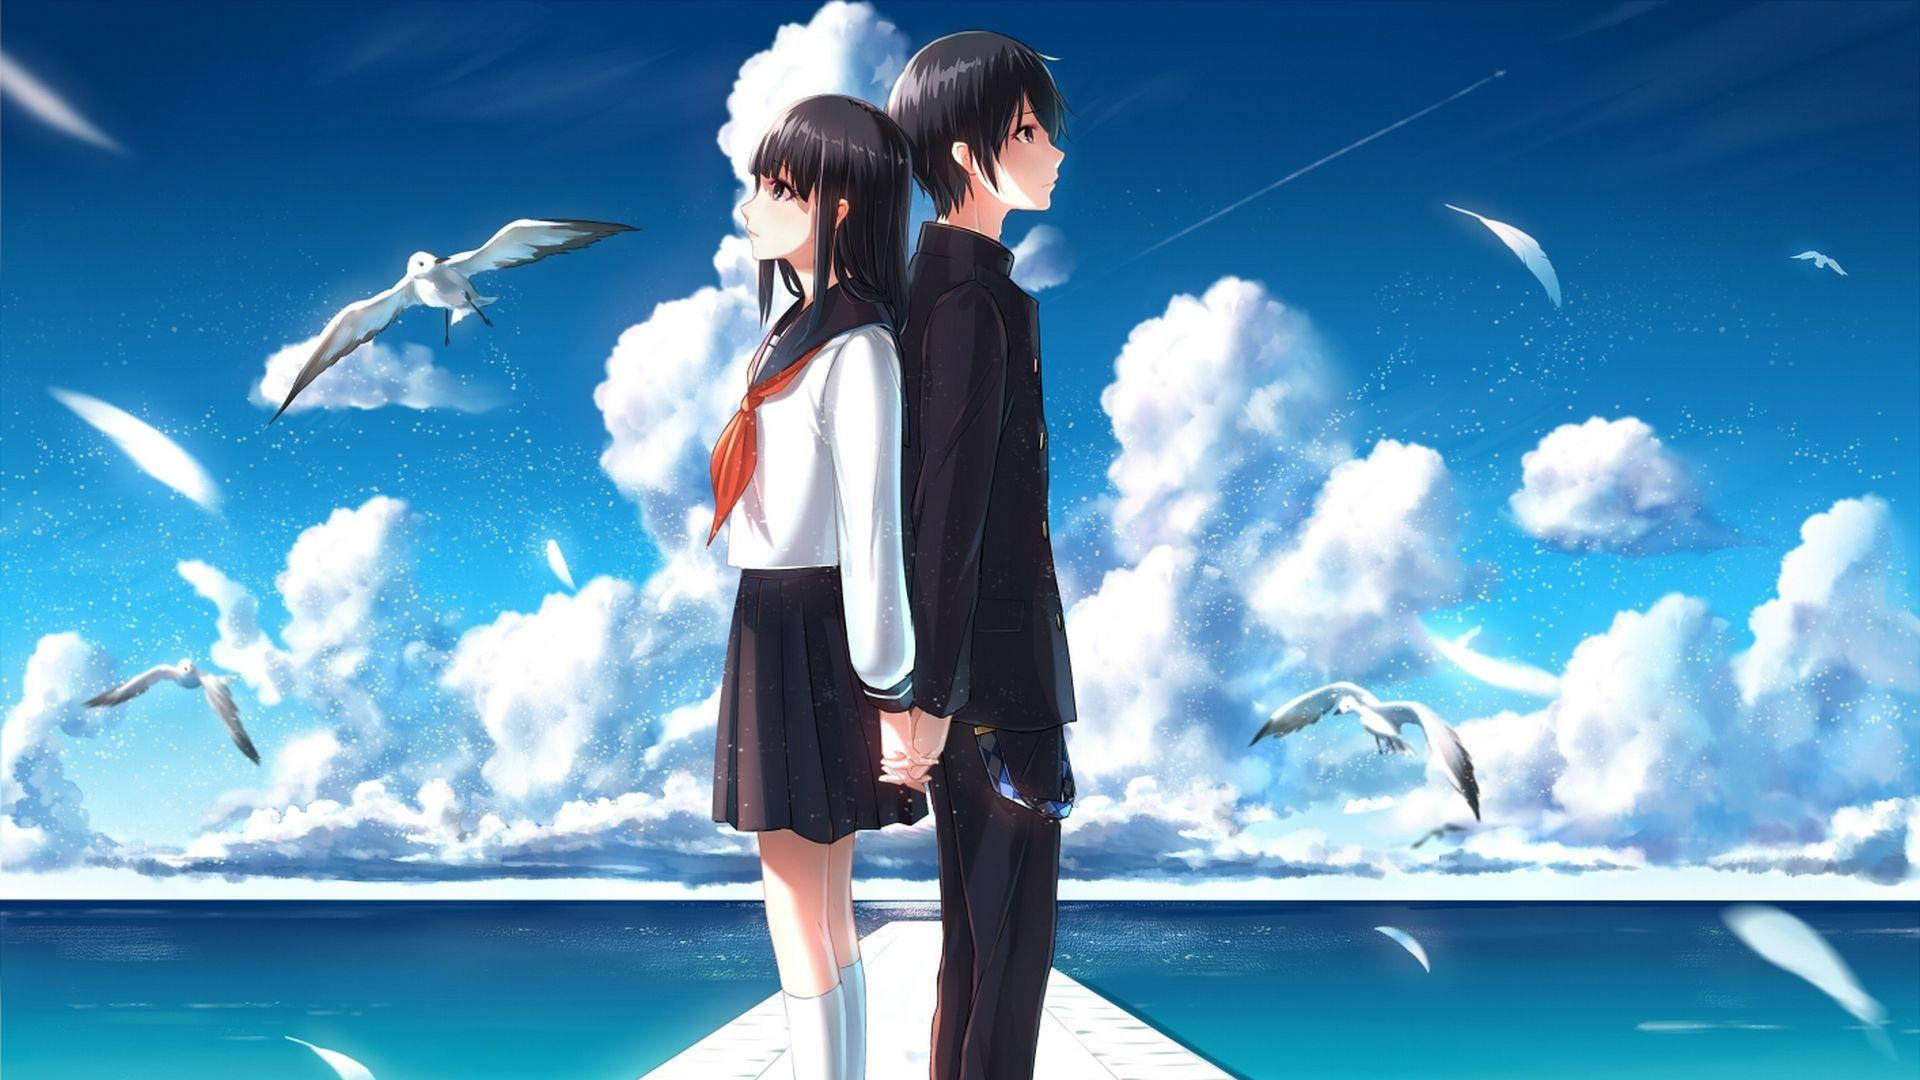 Couple On Slipway Love Anime Wallpaper